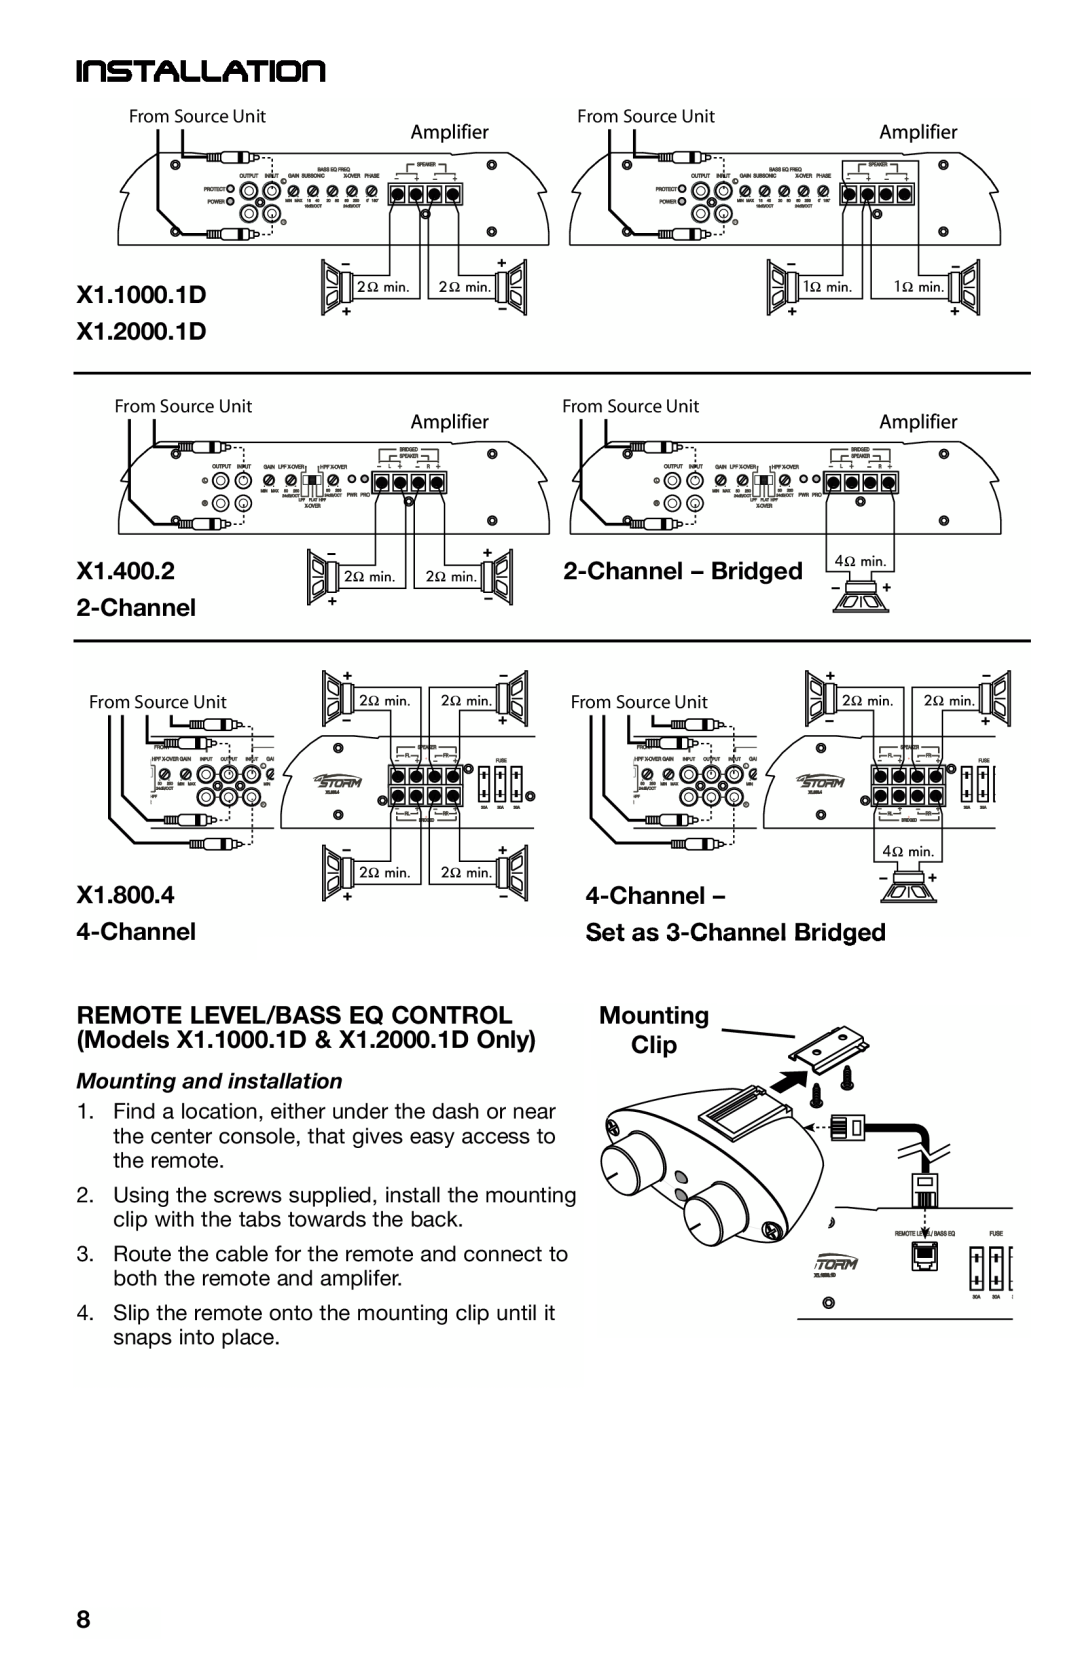 Lightning Audio manual Installation, X1.1000.1D X1.2000.1D, X1.400.2 2-Channel, Channel- Bridged, X1.800.4 4-Channel 